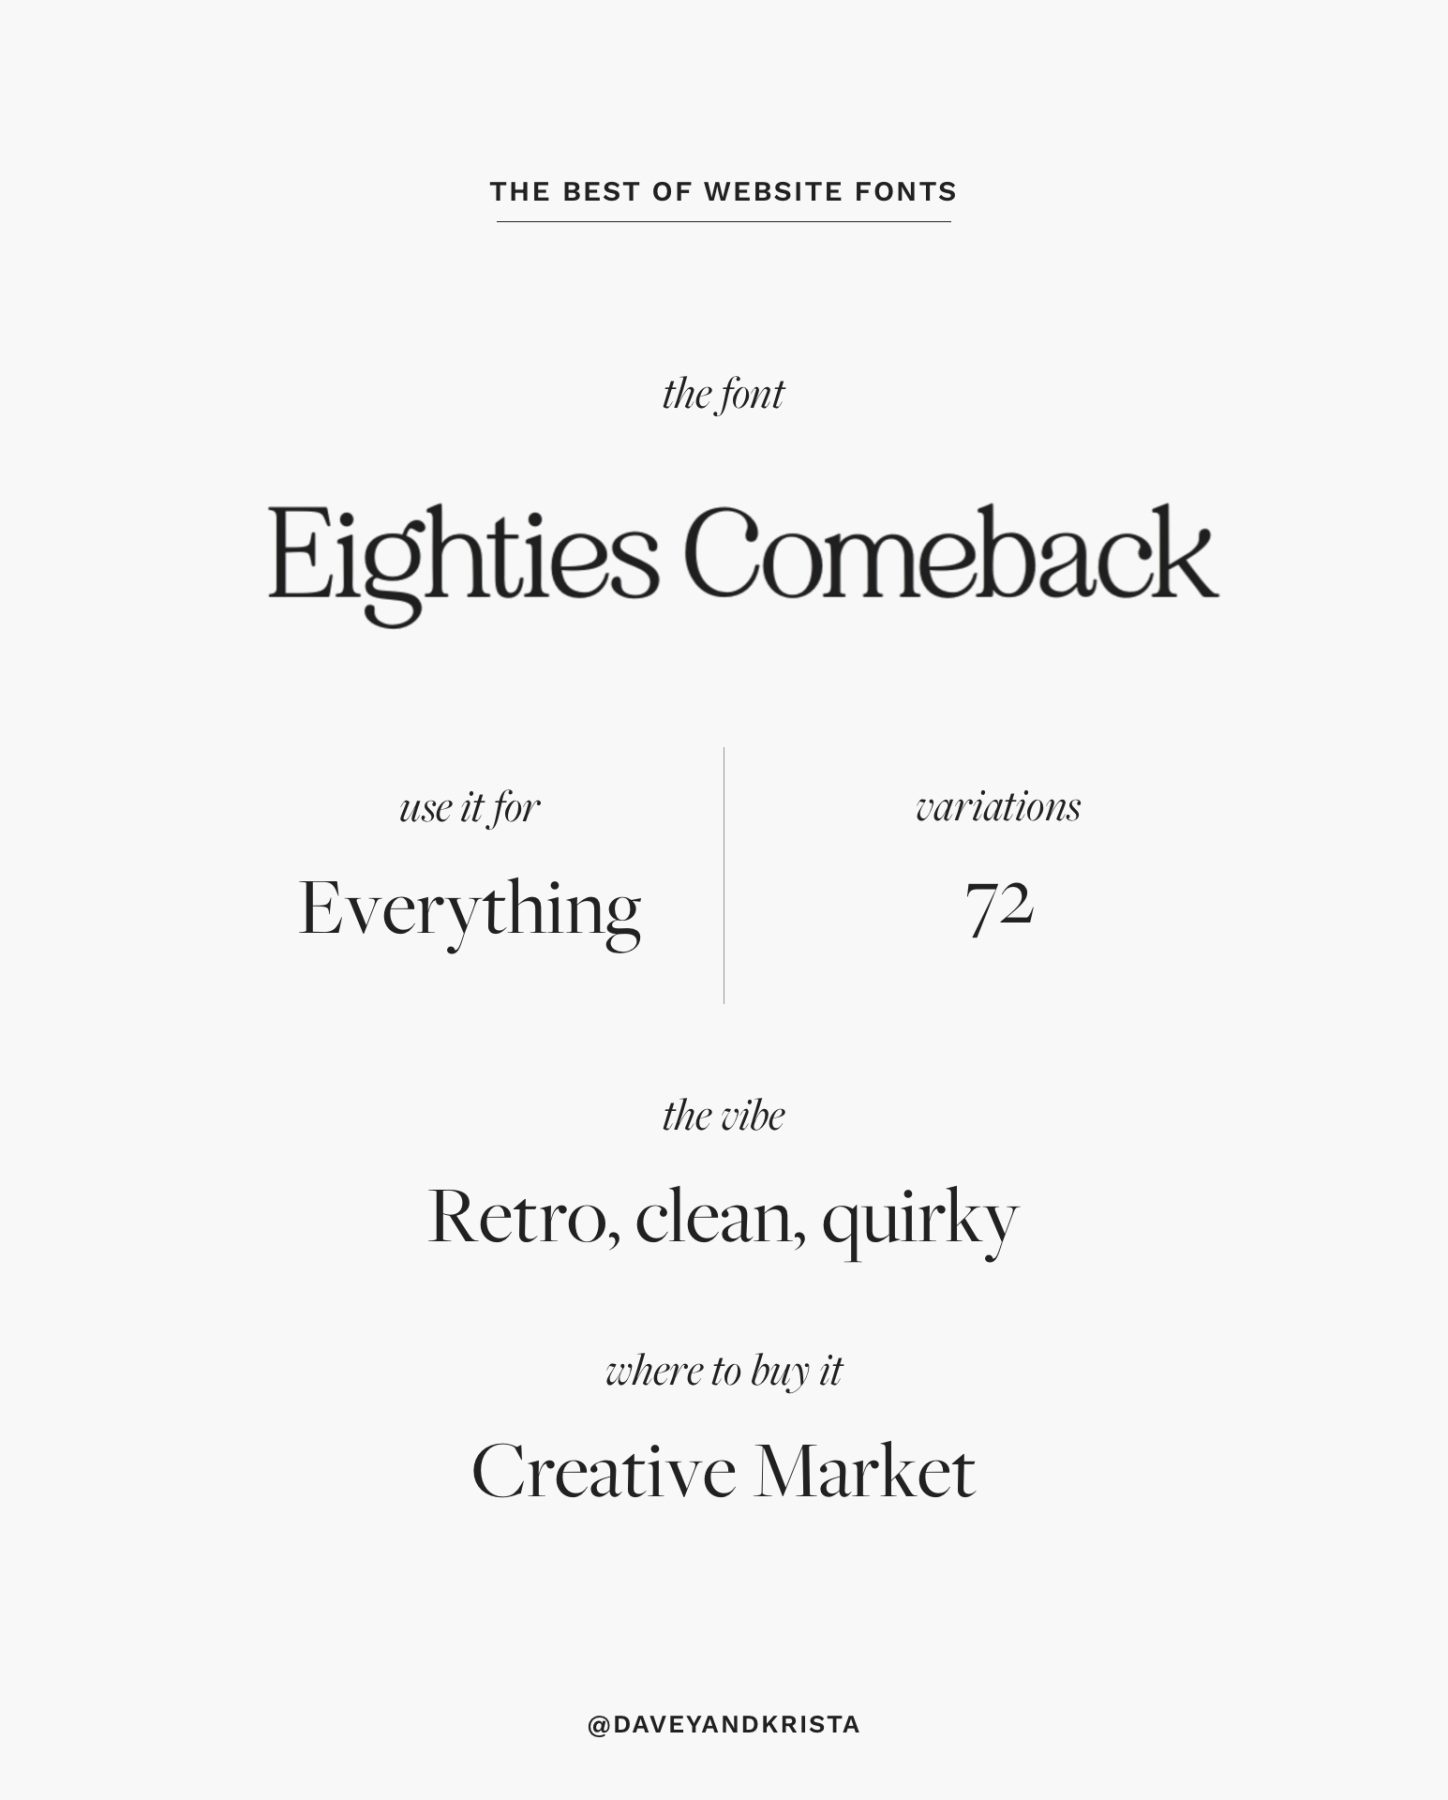 Eighties Comeback font - for websites The Best Fonts for Websites